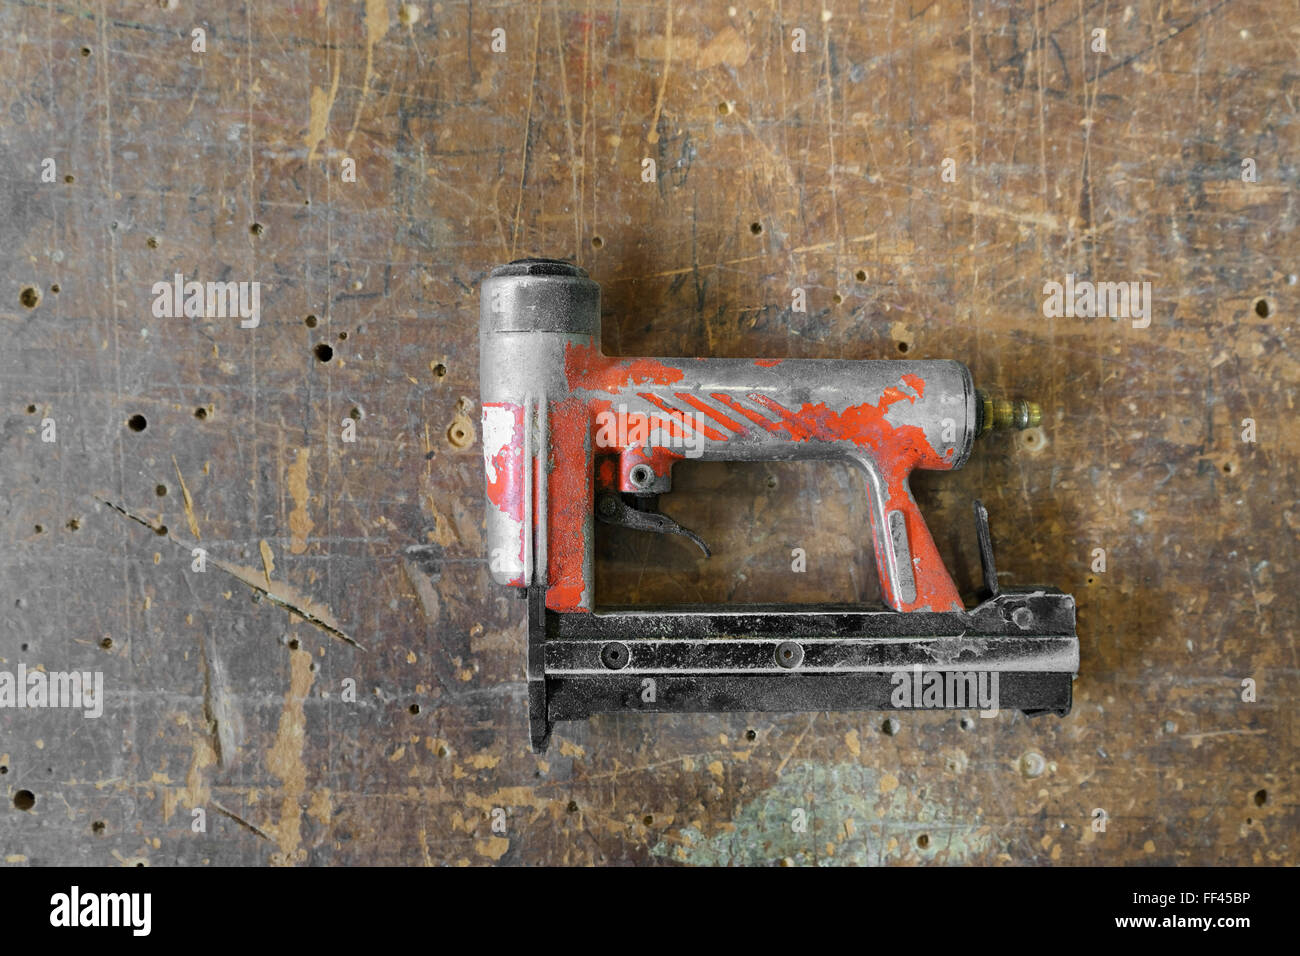 electric nail and staple gun Concrete| Alibaba.com